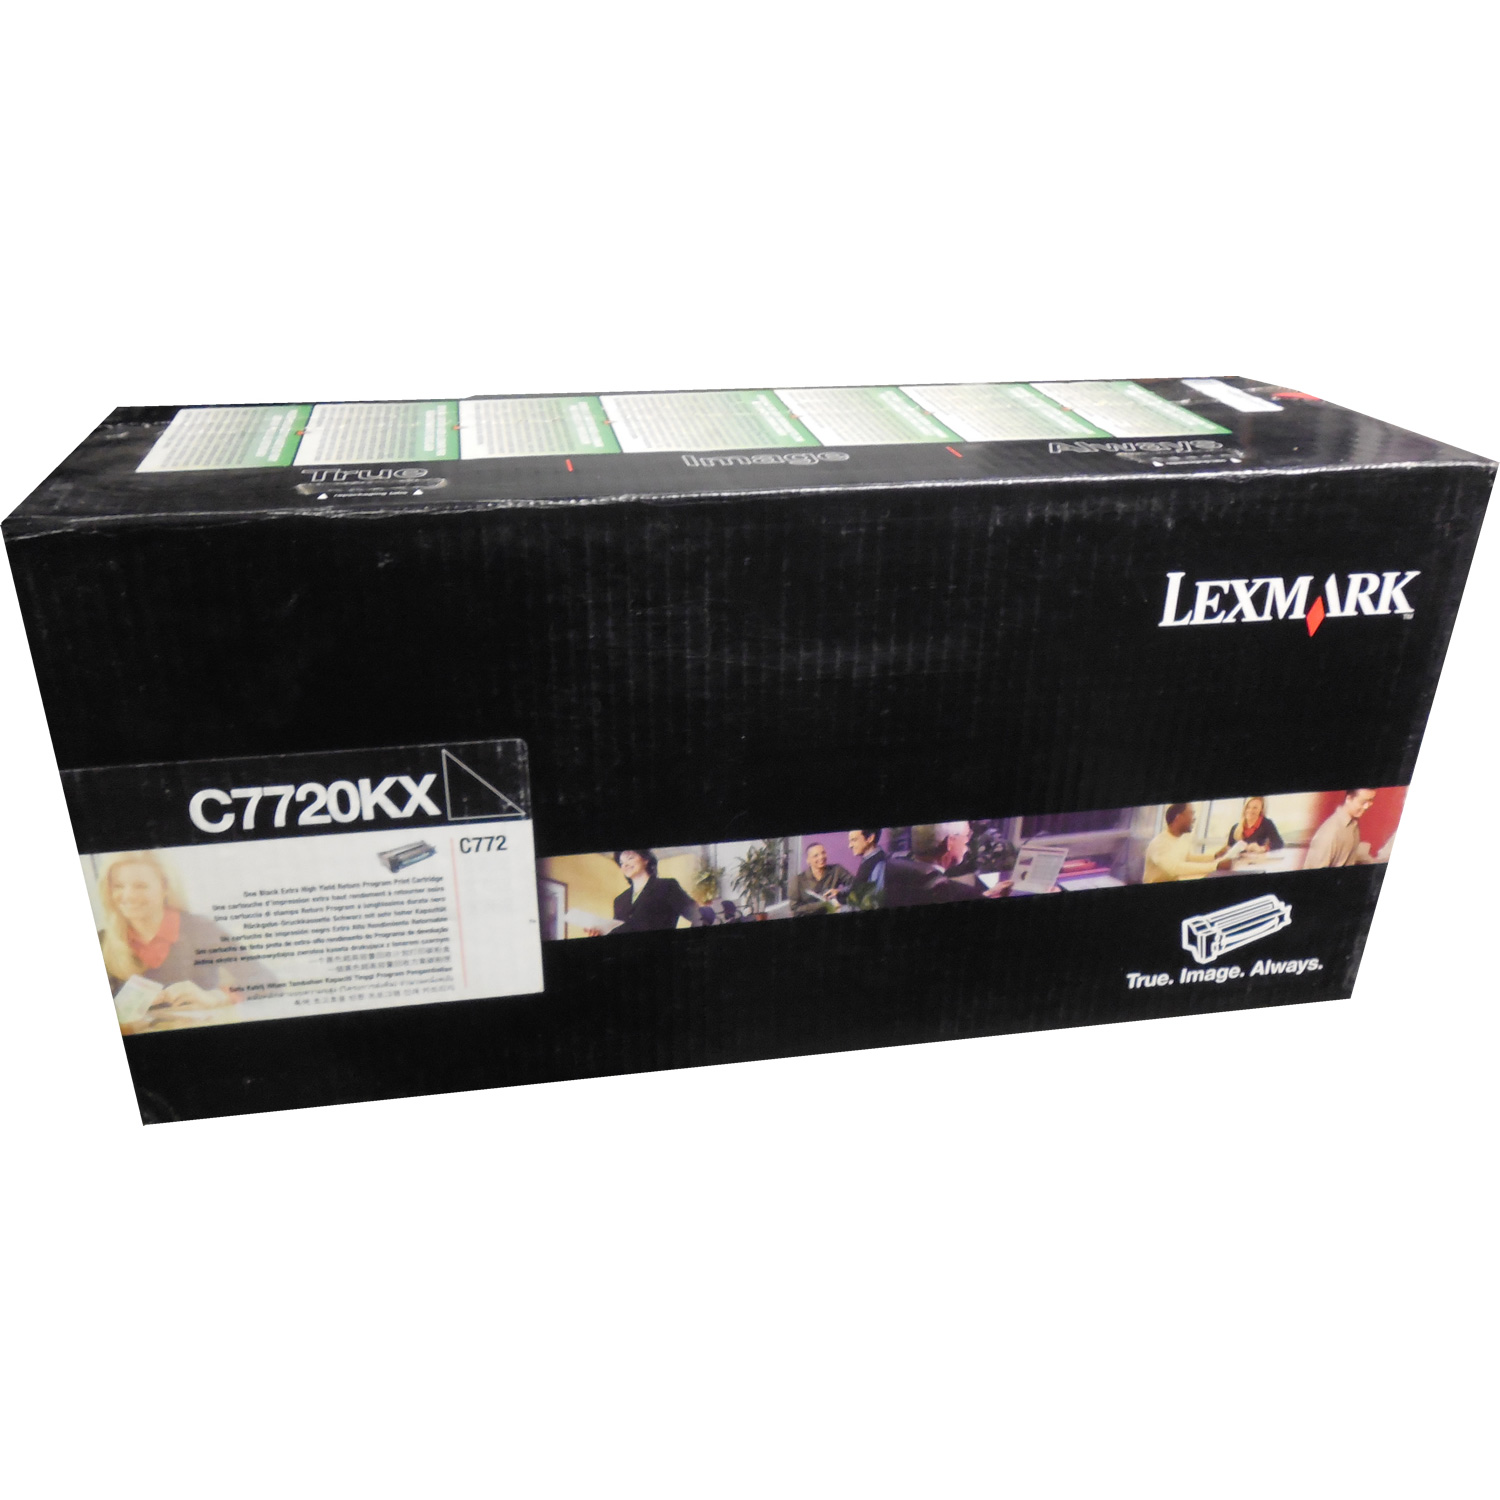 Original Lexmark C7720KX Black Extra High Capacity Toner Cartridge (C7720KX)